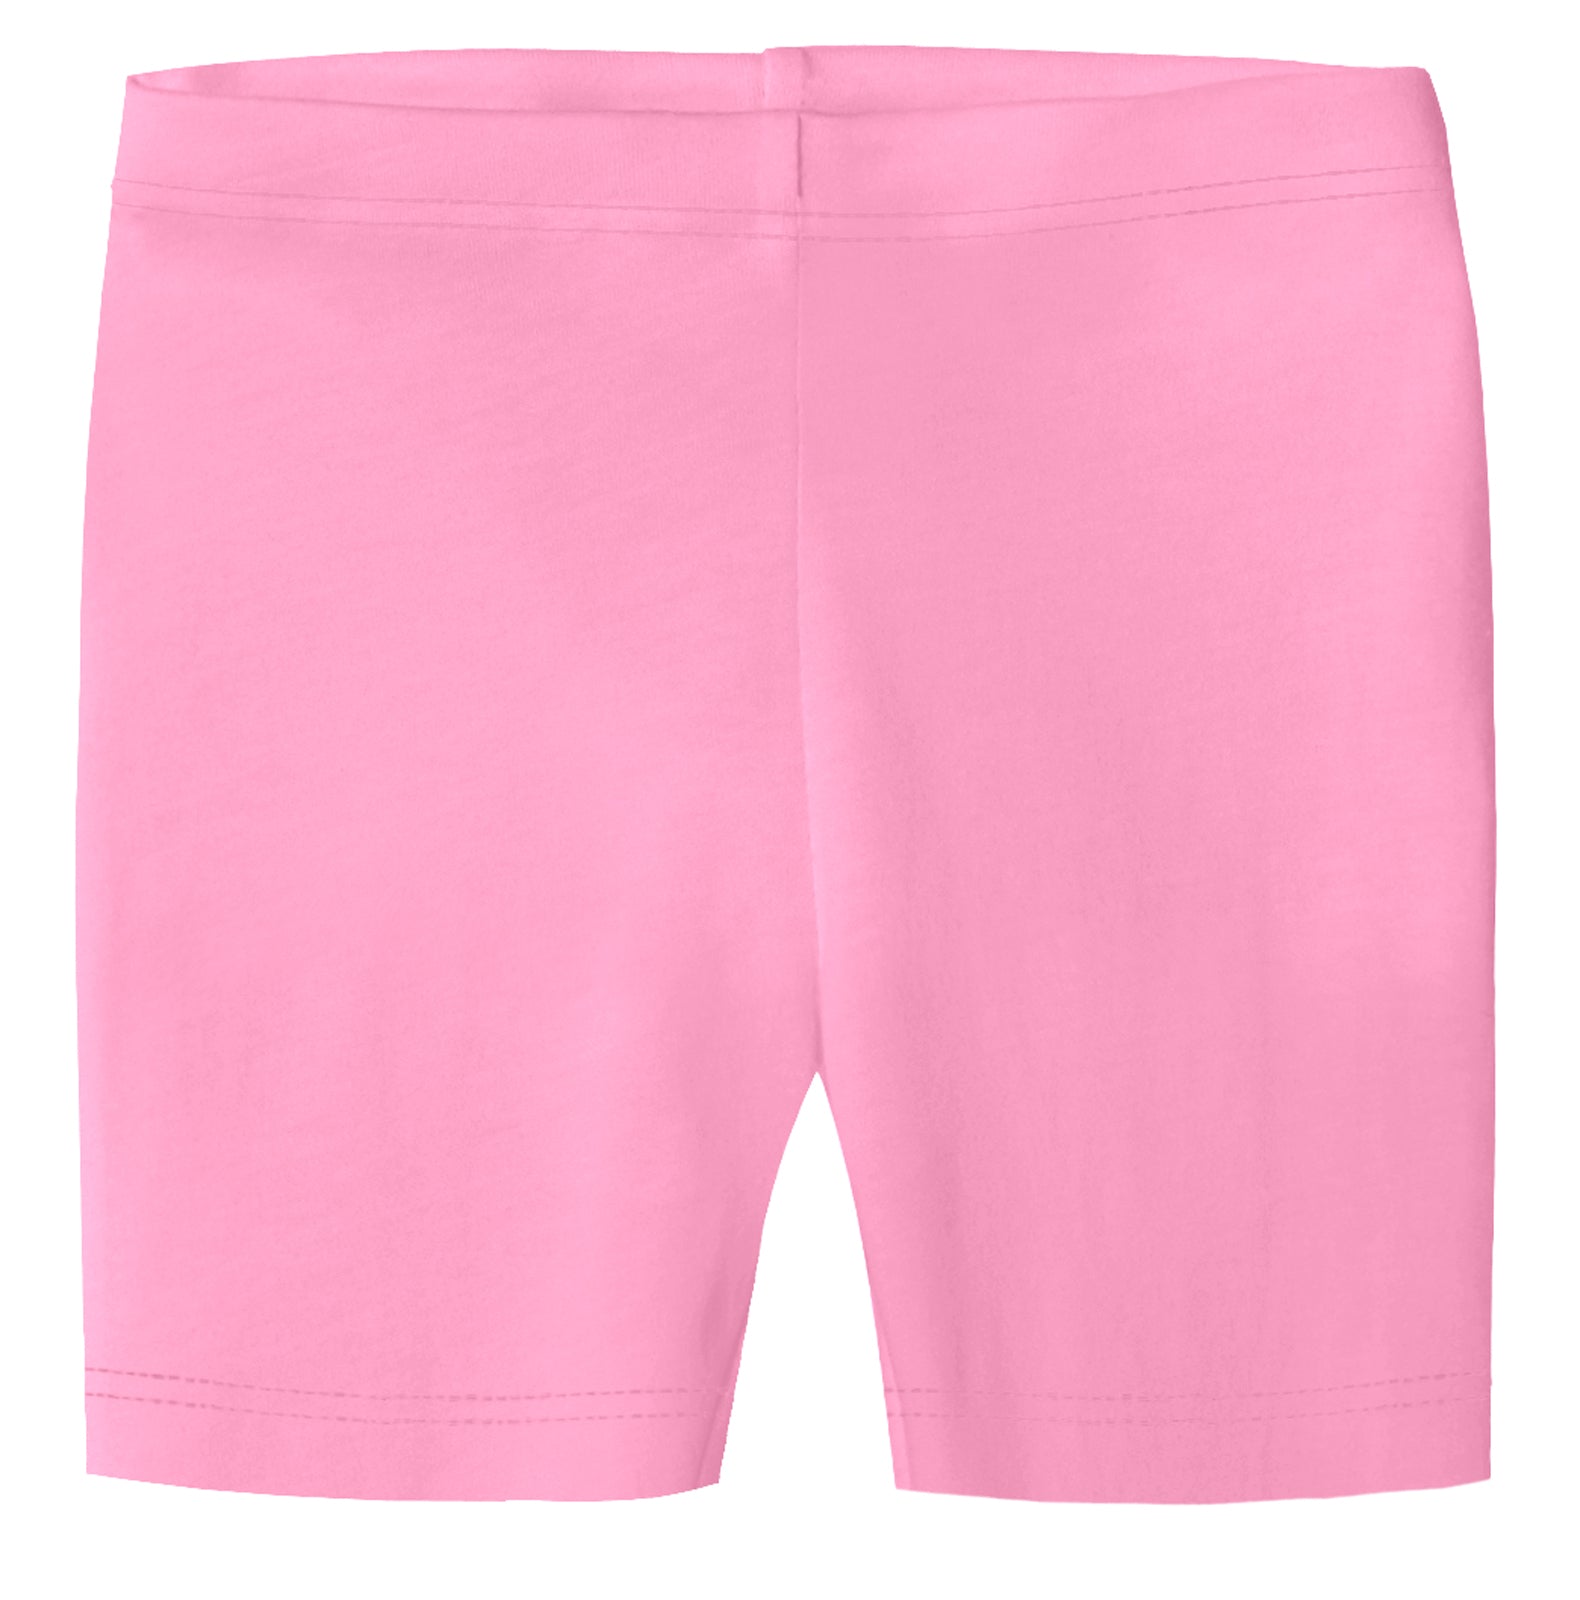 Girls Cotton Under School Skirt Modesty Short Stretch Shorts For Sports  4-16y